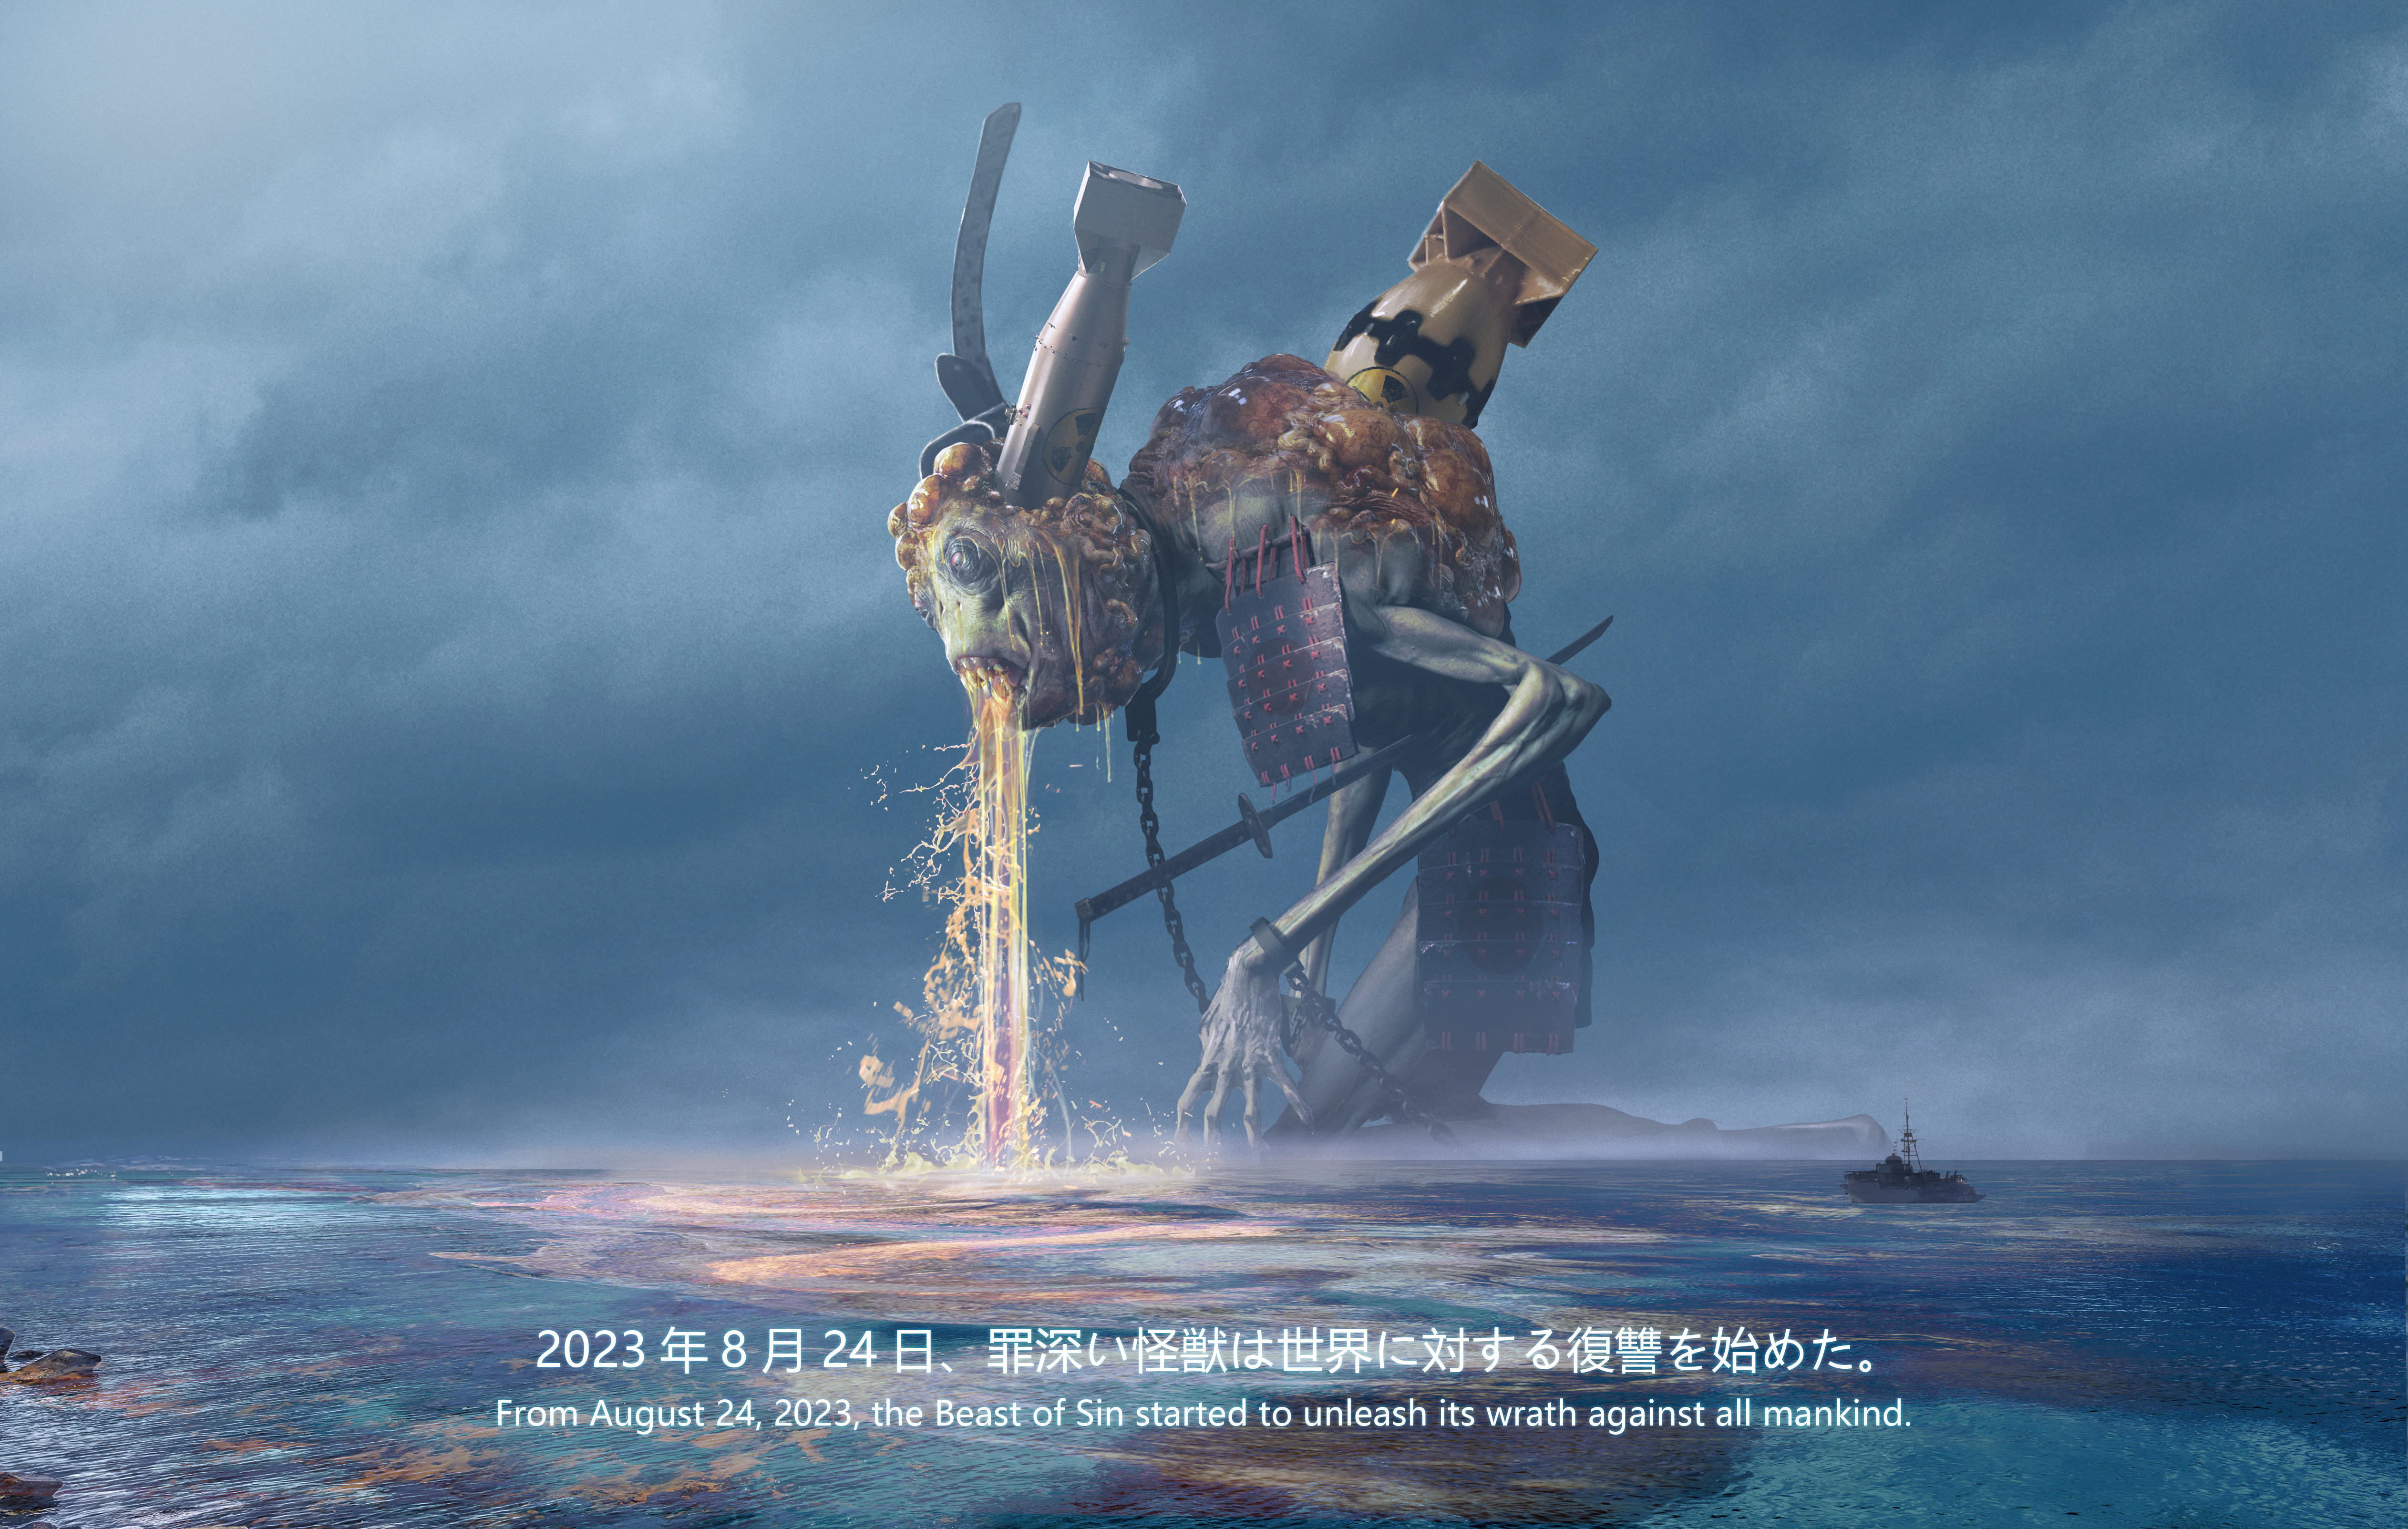 General 5050x3207 WuHeQiLin sea nuclear politics sky water text Japanese clouds creature chains digital art giant love propaganda